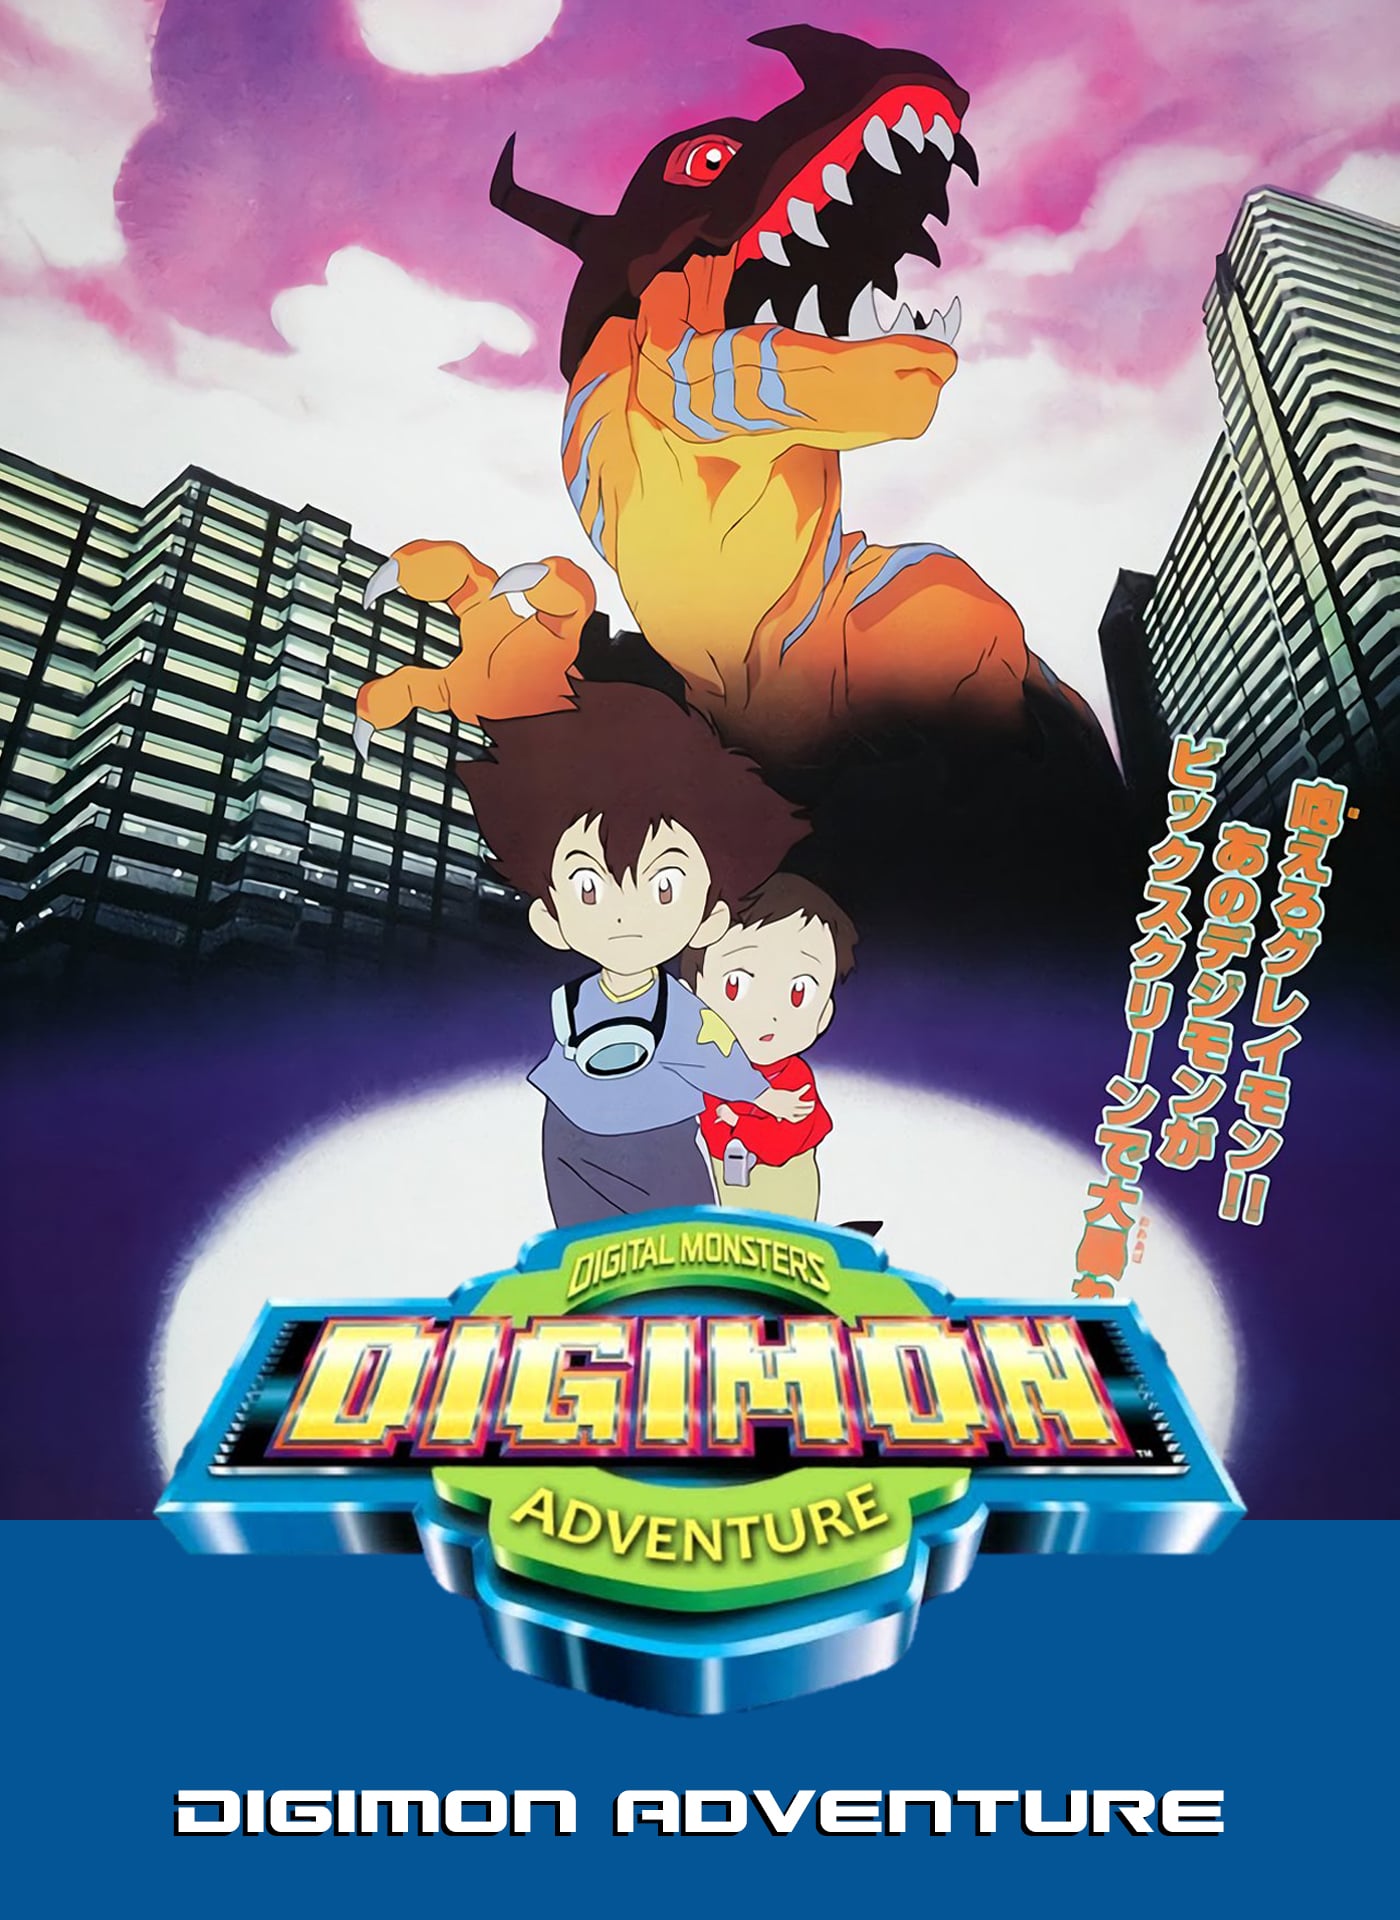 digimon revenge of diaboromon english dub download